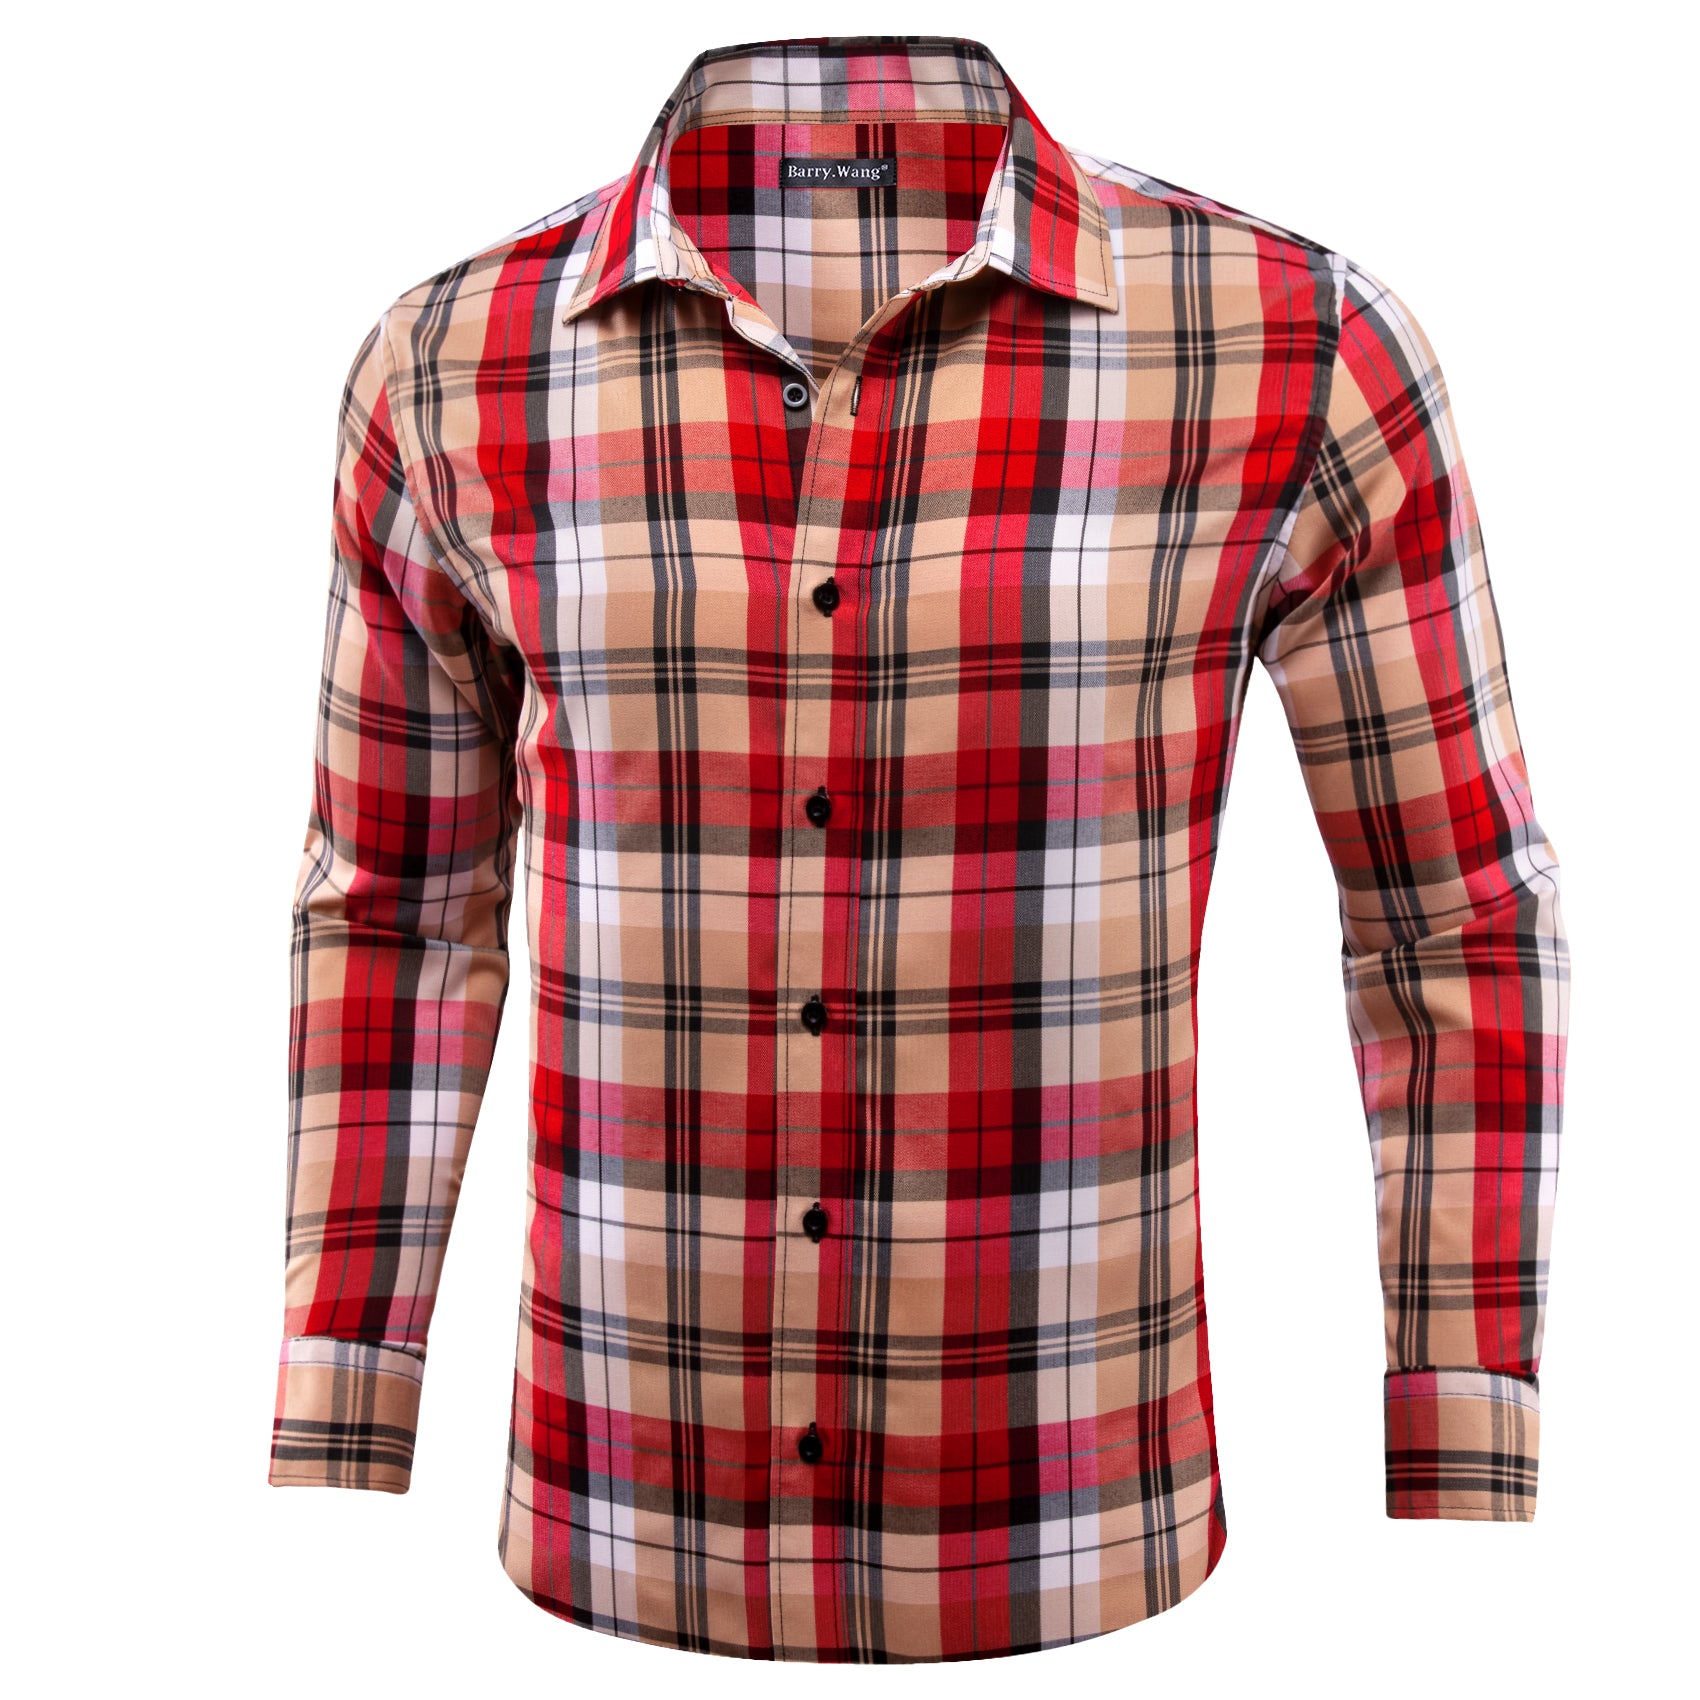 Barry.wang Button Down Shirt khaki Red Plaid Men's Long Sleeve Shirt